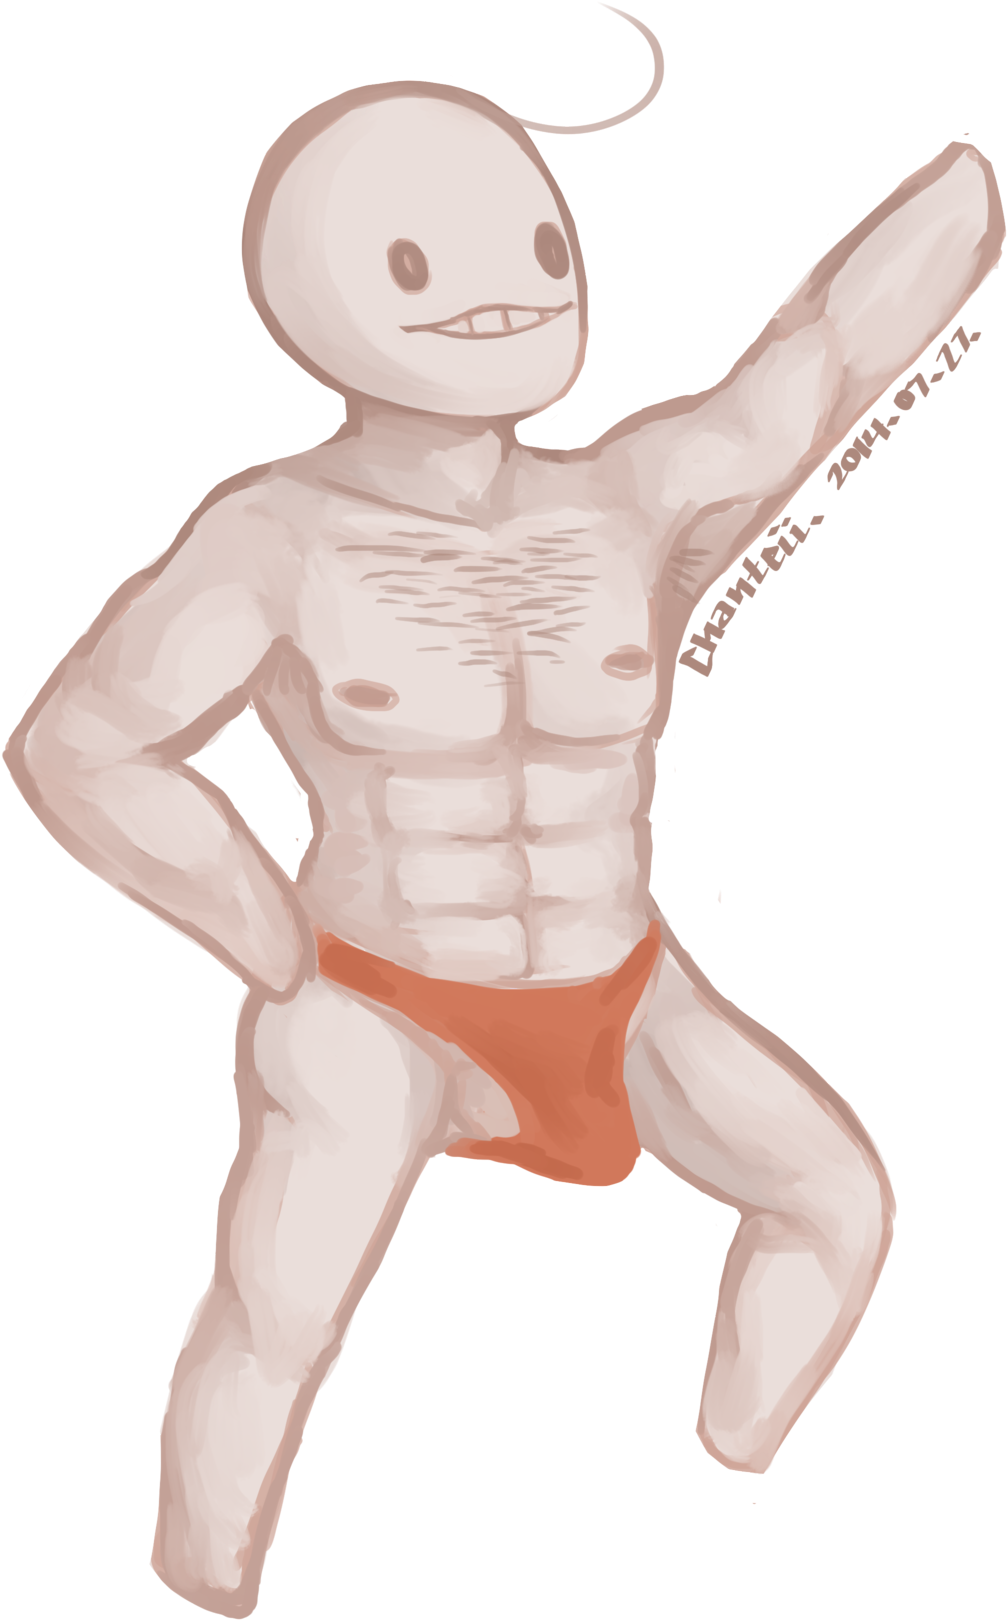 A Cartoon Of A Man In Underwear